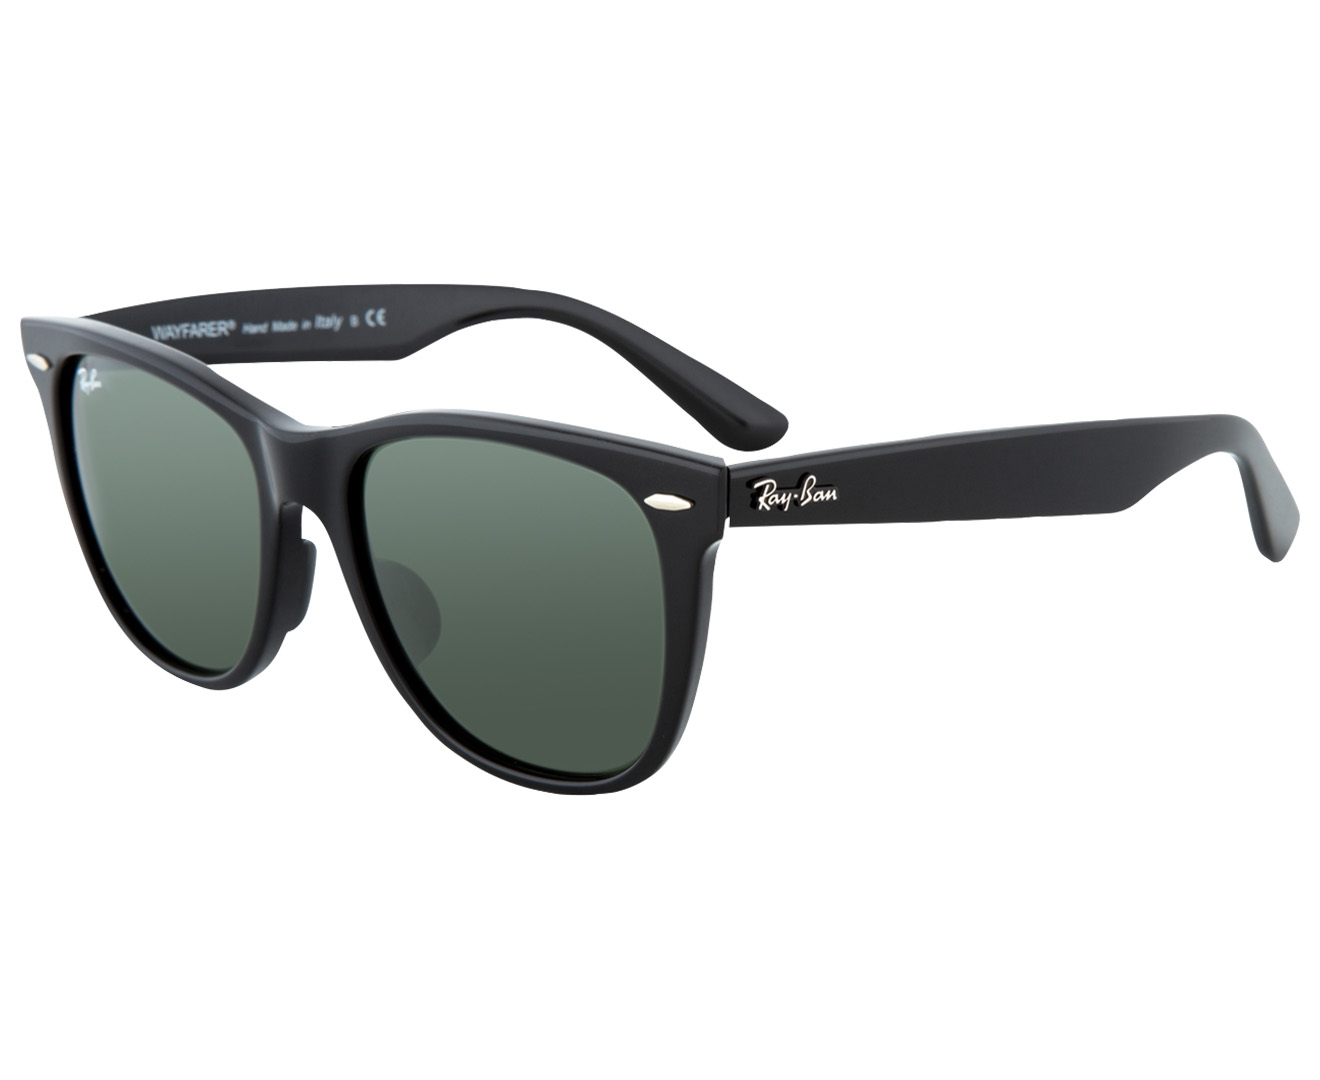 Ray-Ban Wayfarer 2140F Sunglasses - Black/Grey | Catch.co.nz